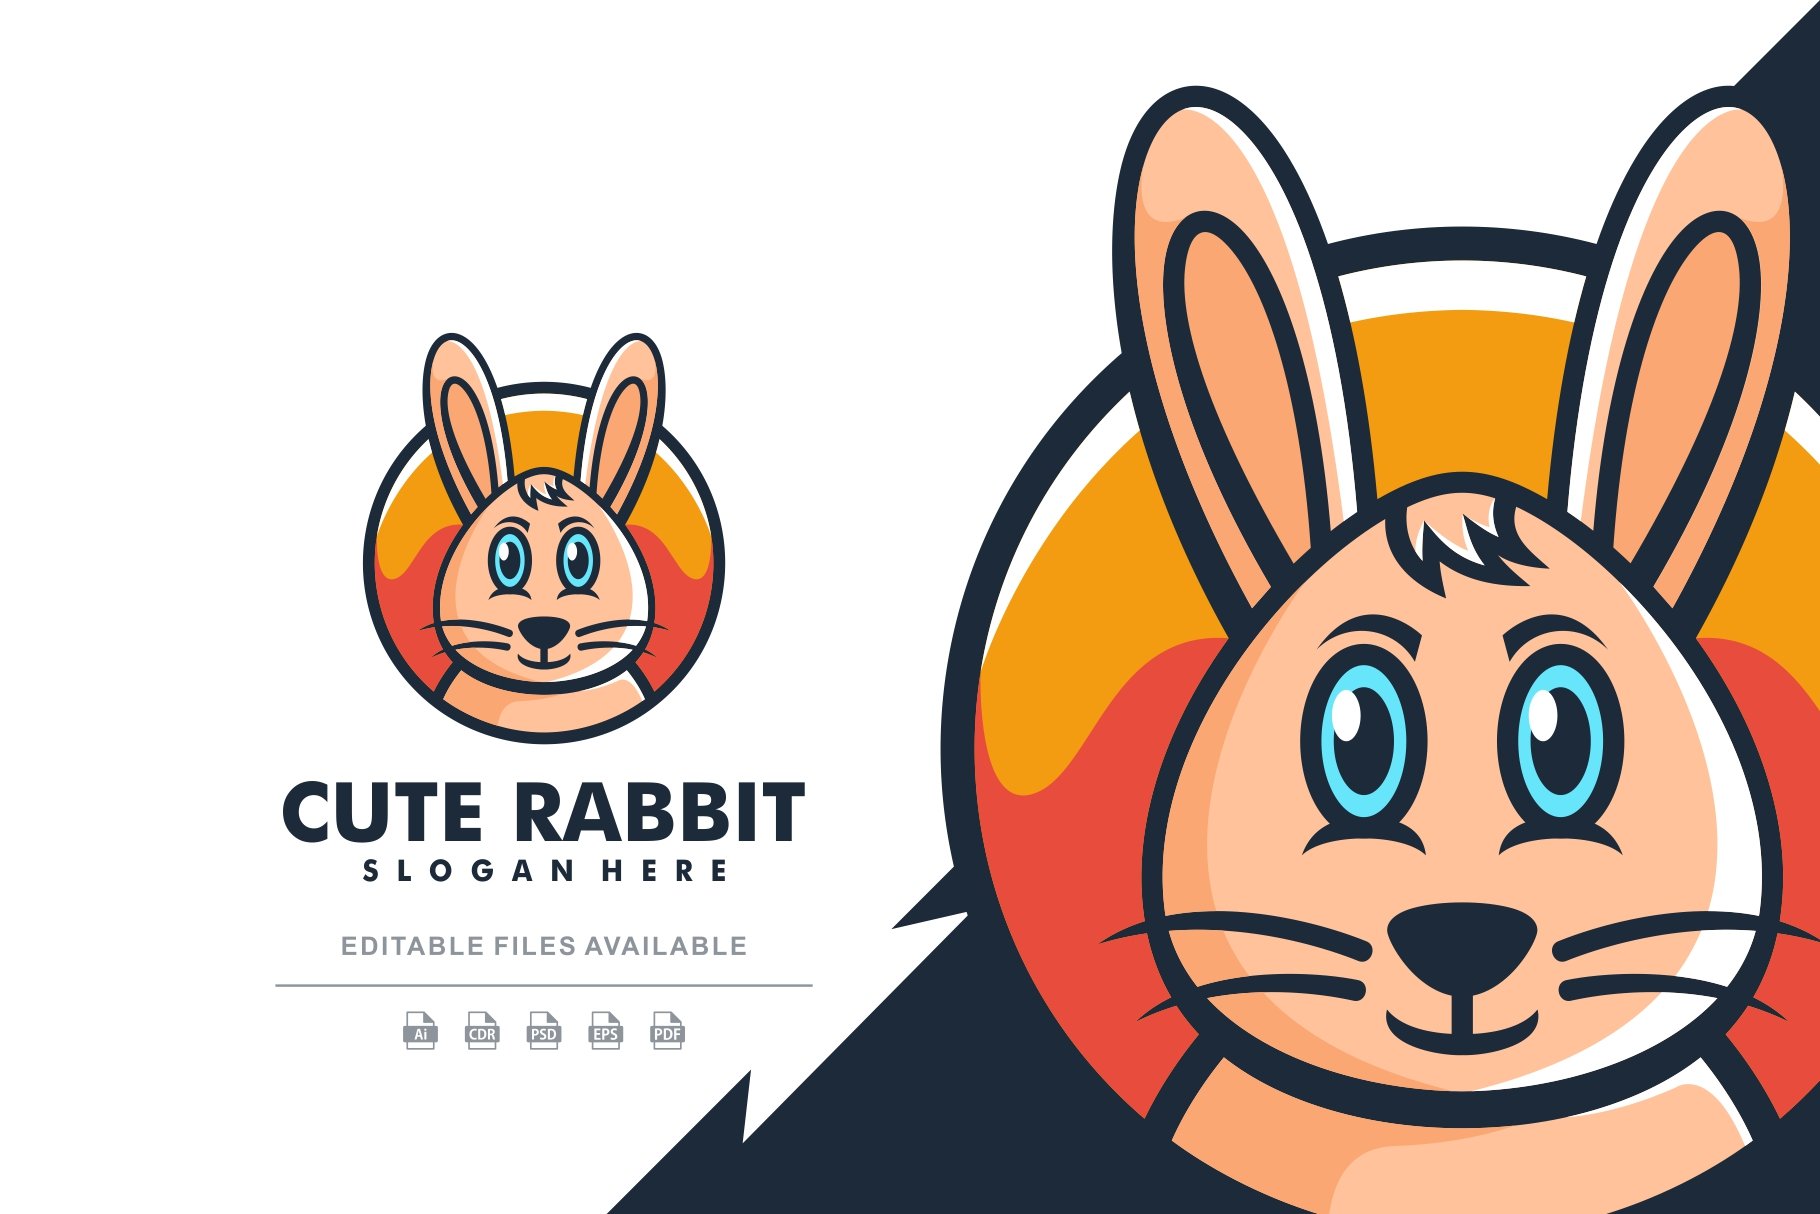 Rabbit Simple Mascot Logo cover image.